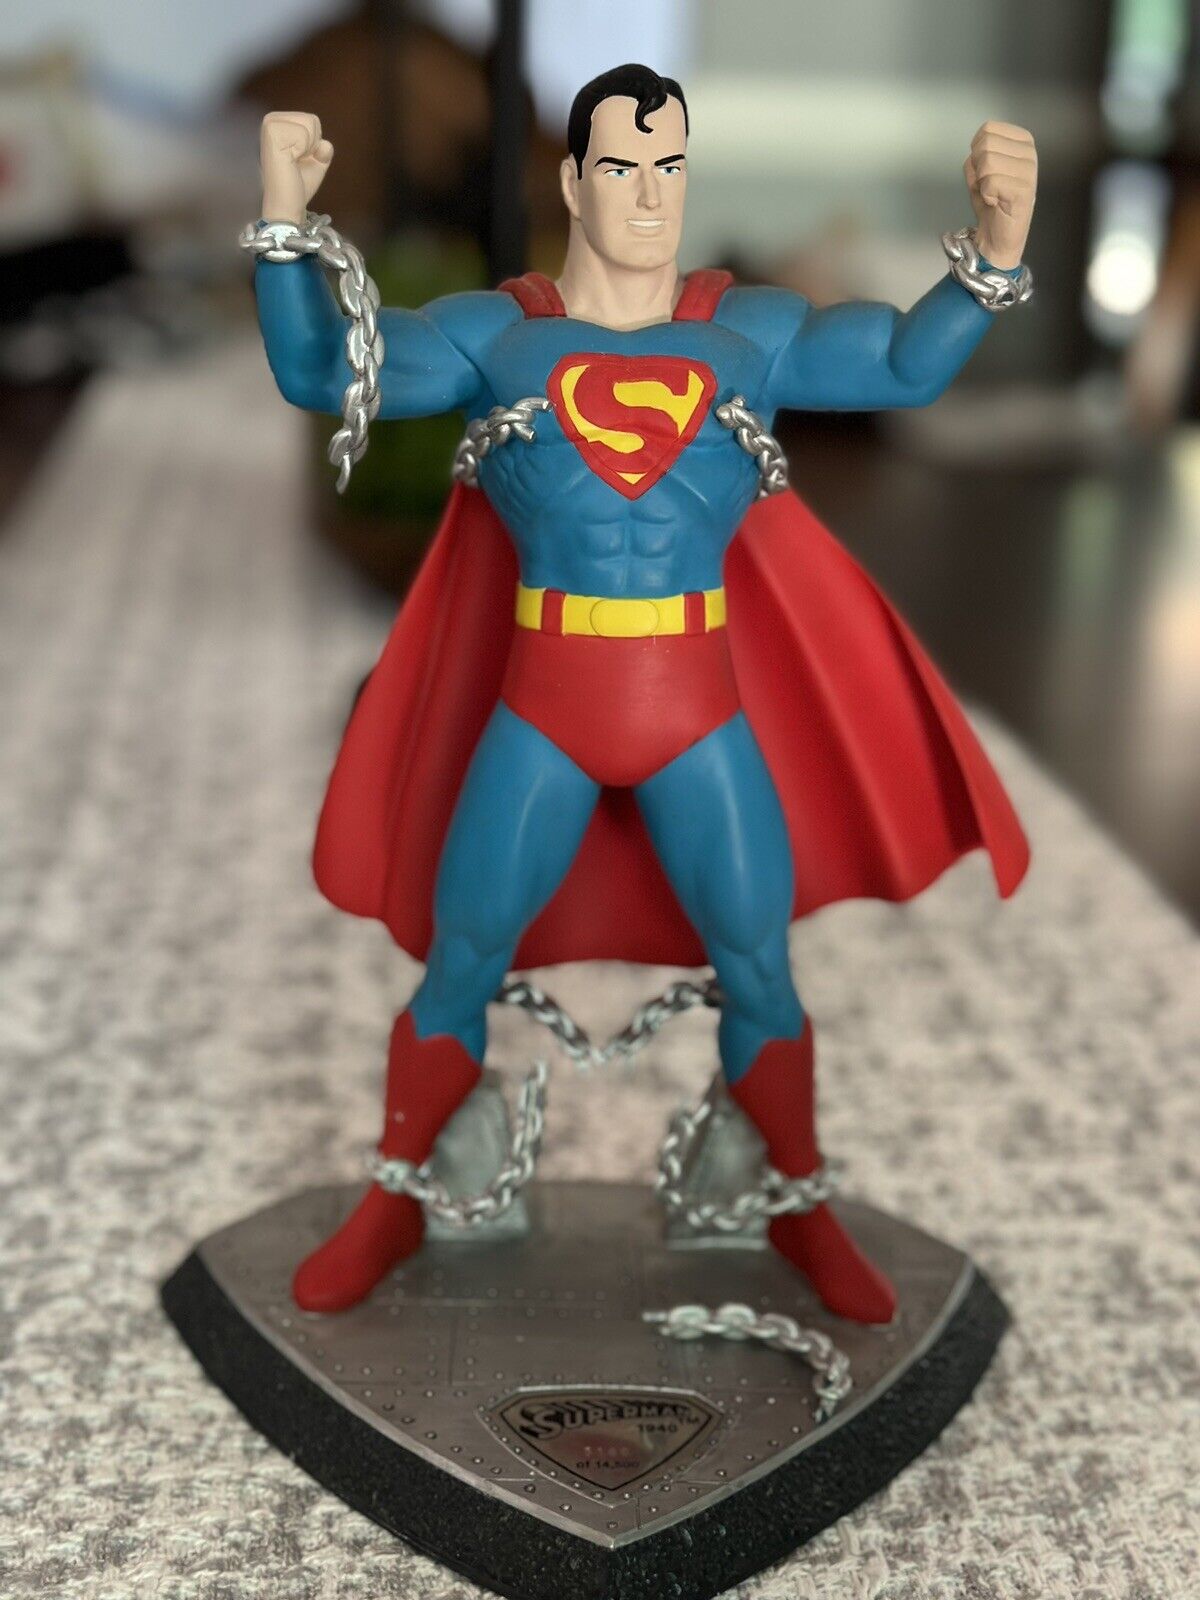 DC Comics, Superman - Man of Steel, Resin Sculpture, Number Inscribed